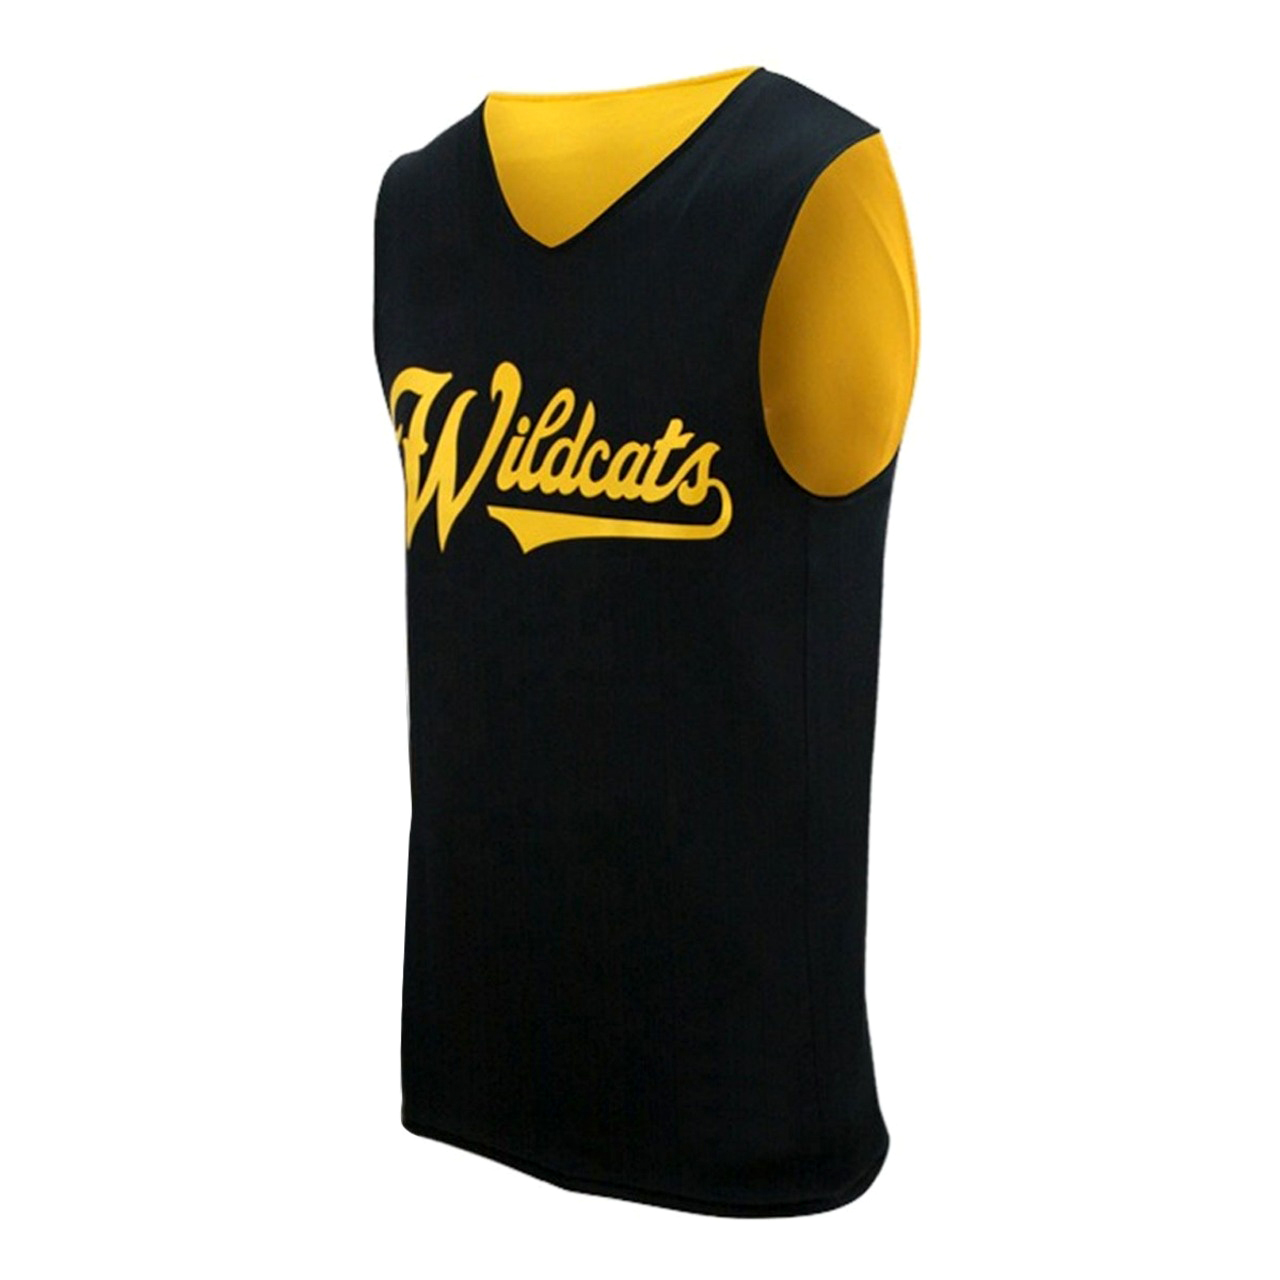 Custom Printed Basketball Uniform